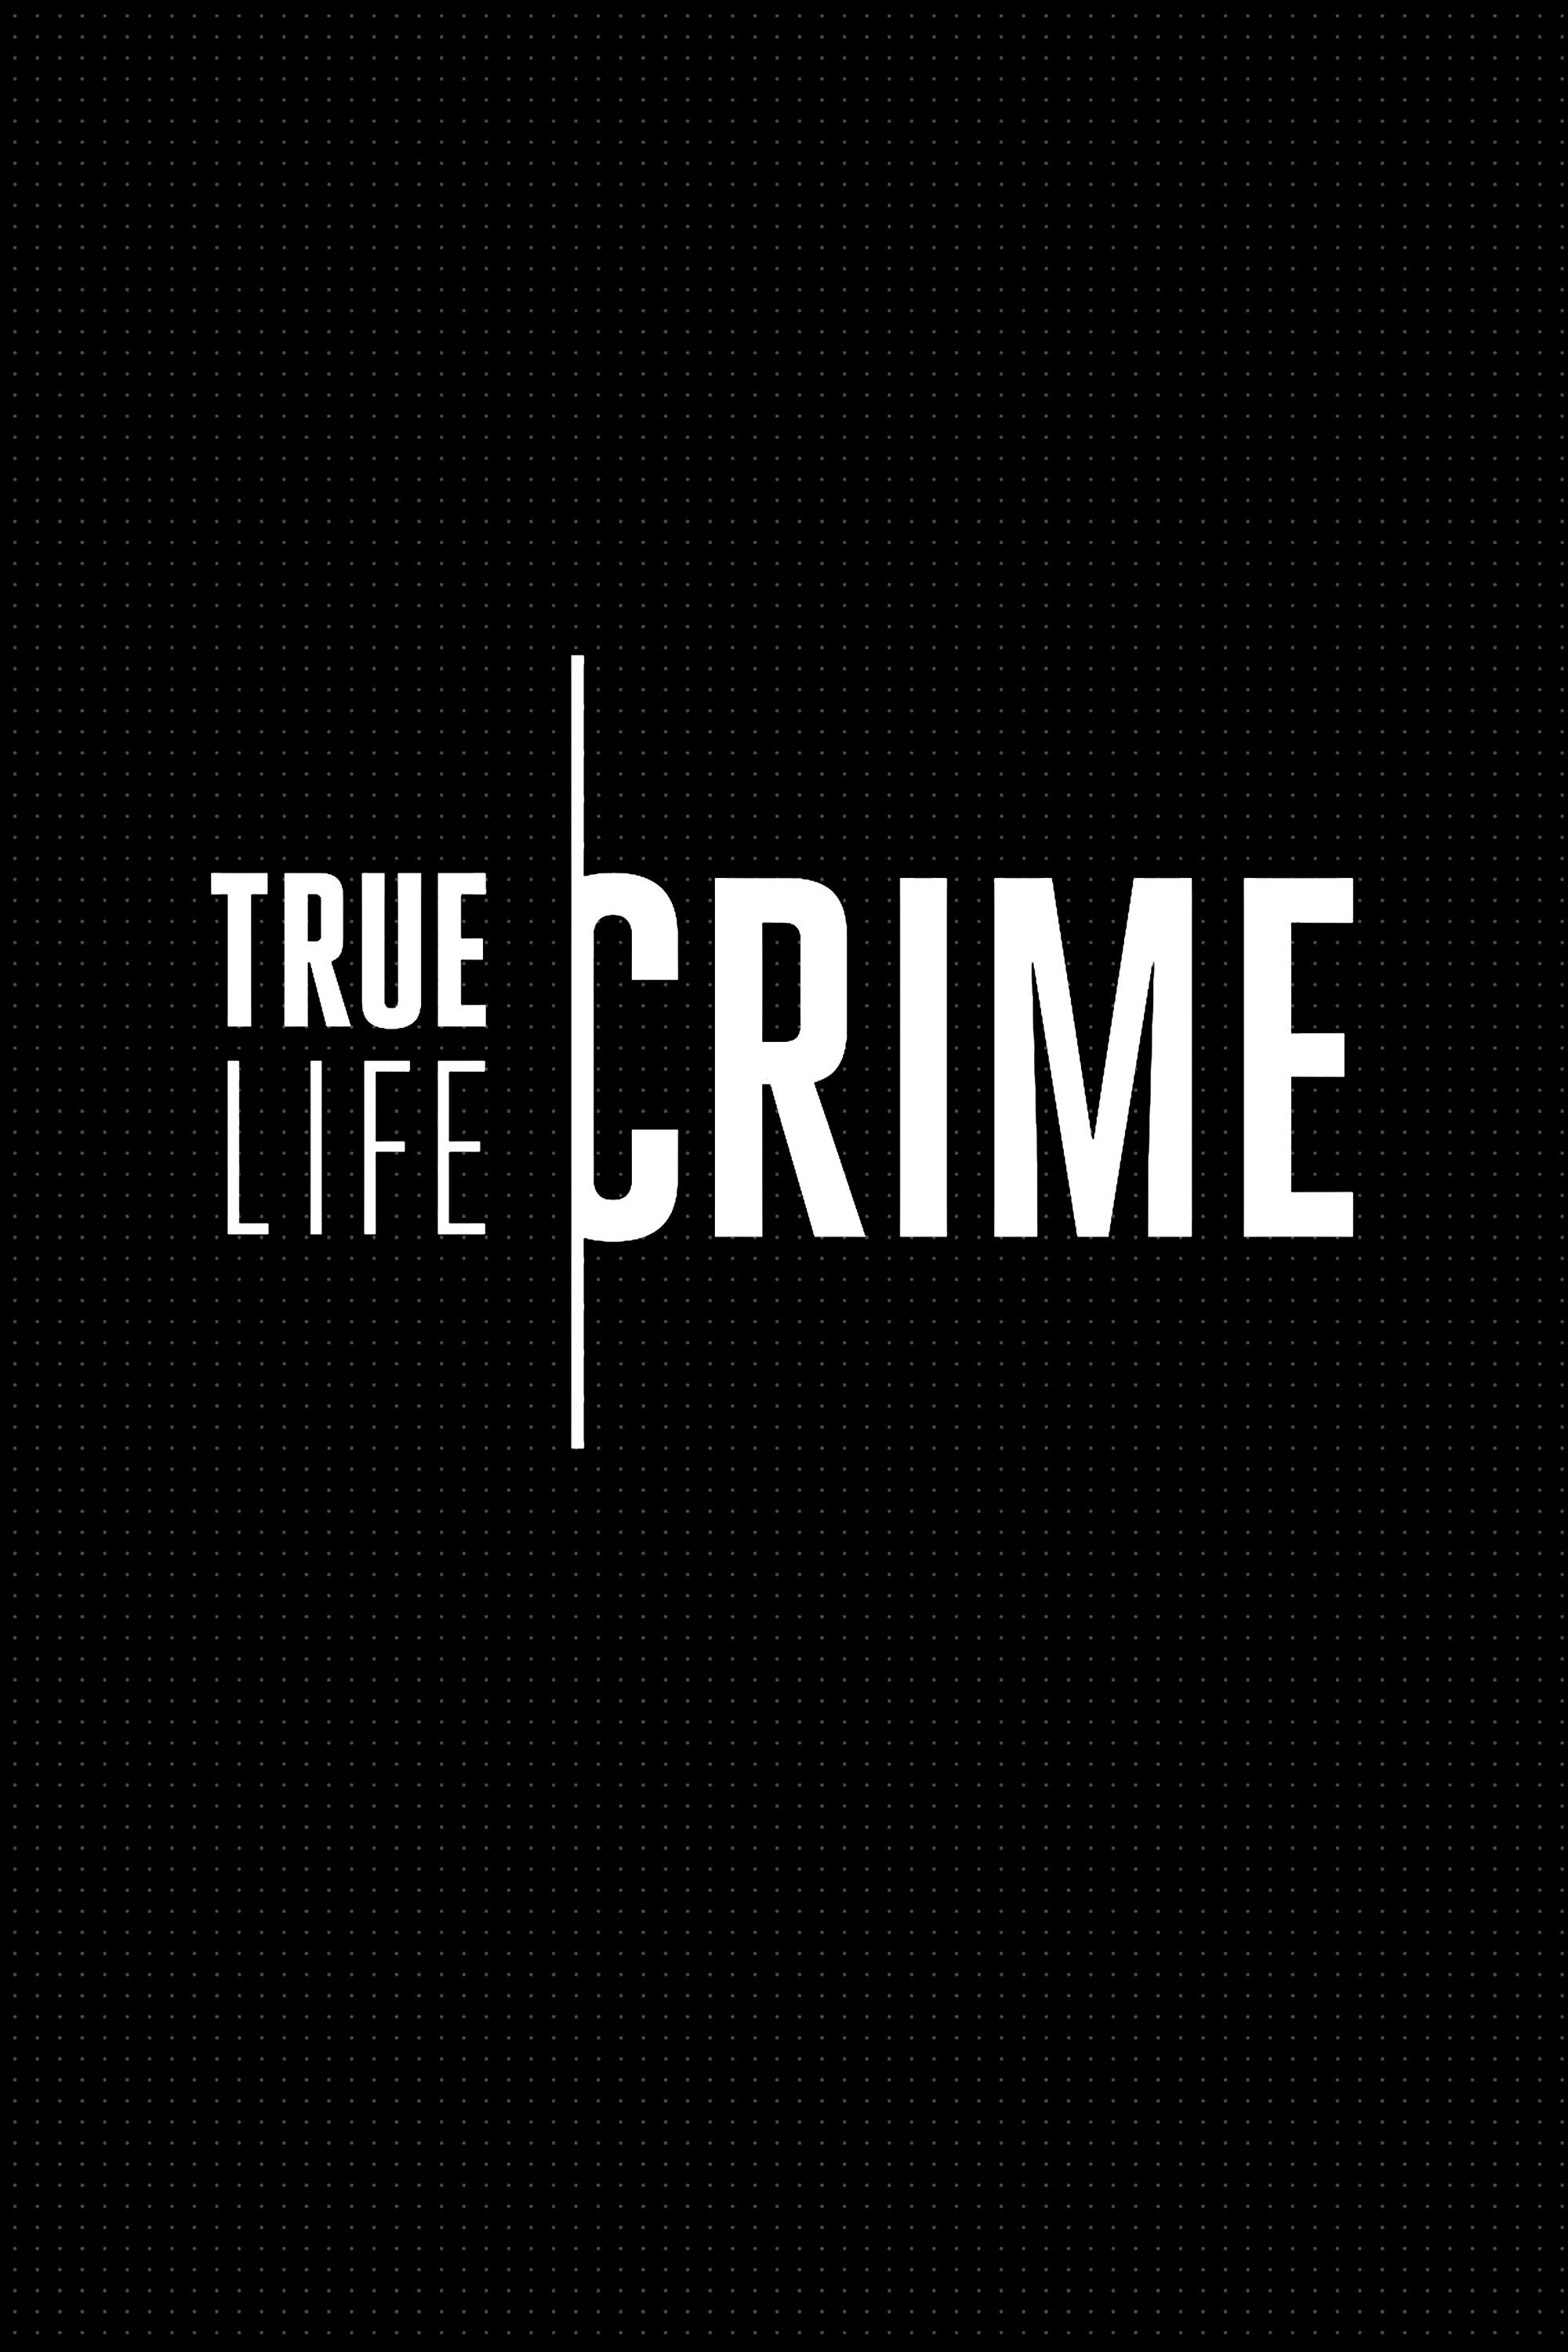 True Life Crime.jpg